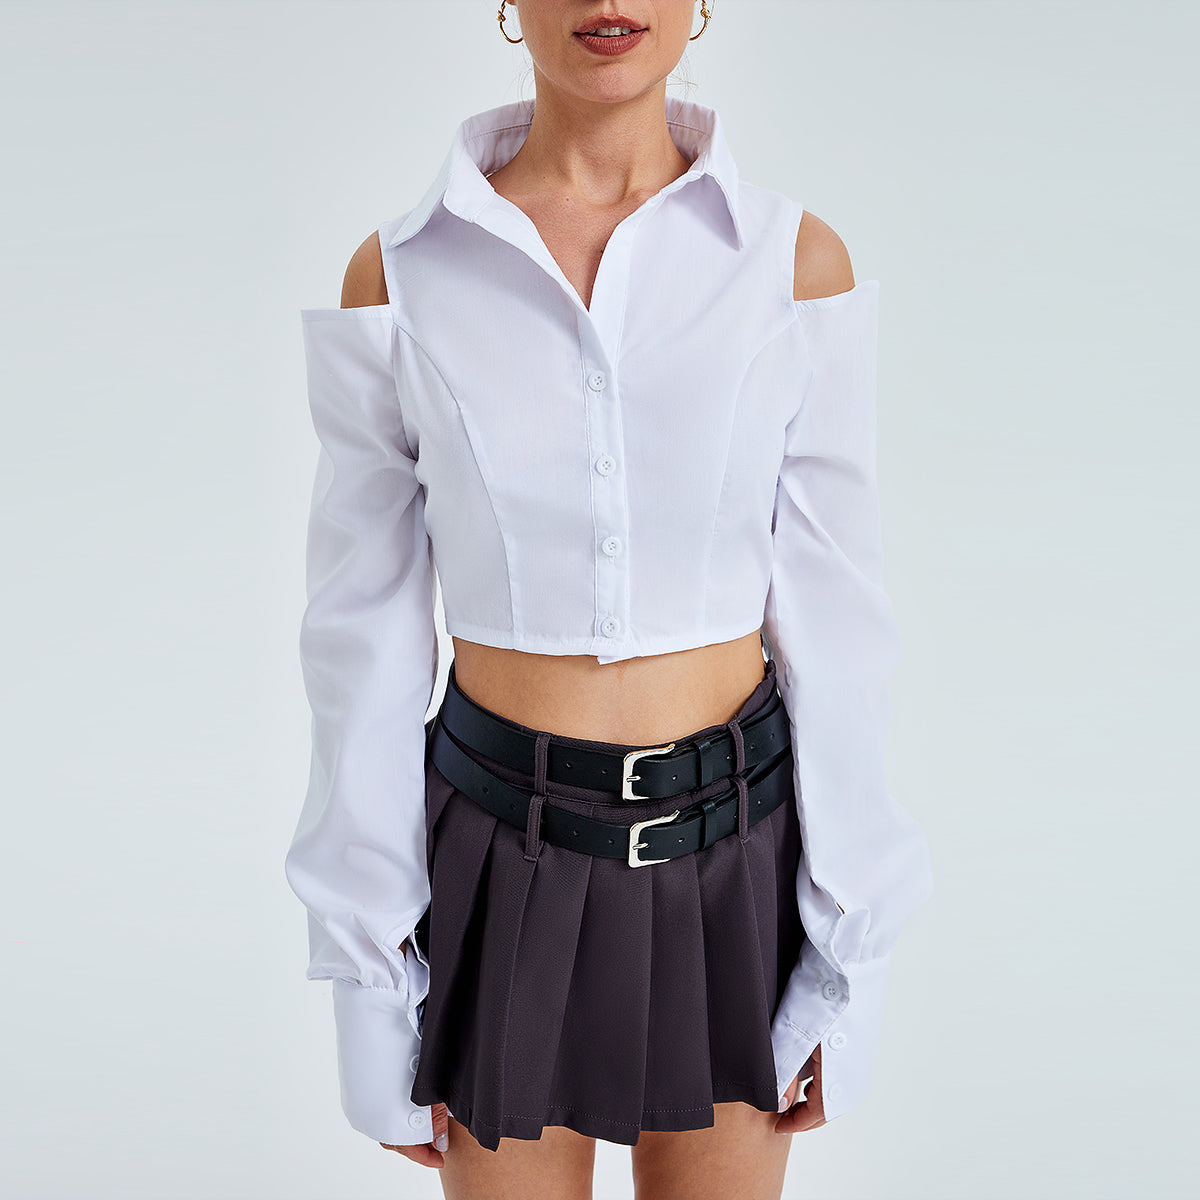 Women's Shirt Slim-fit Fashion Off-shoulder Loose Long-sleeve Shirt - Carvan Mart